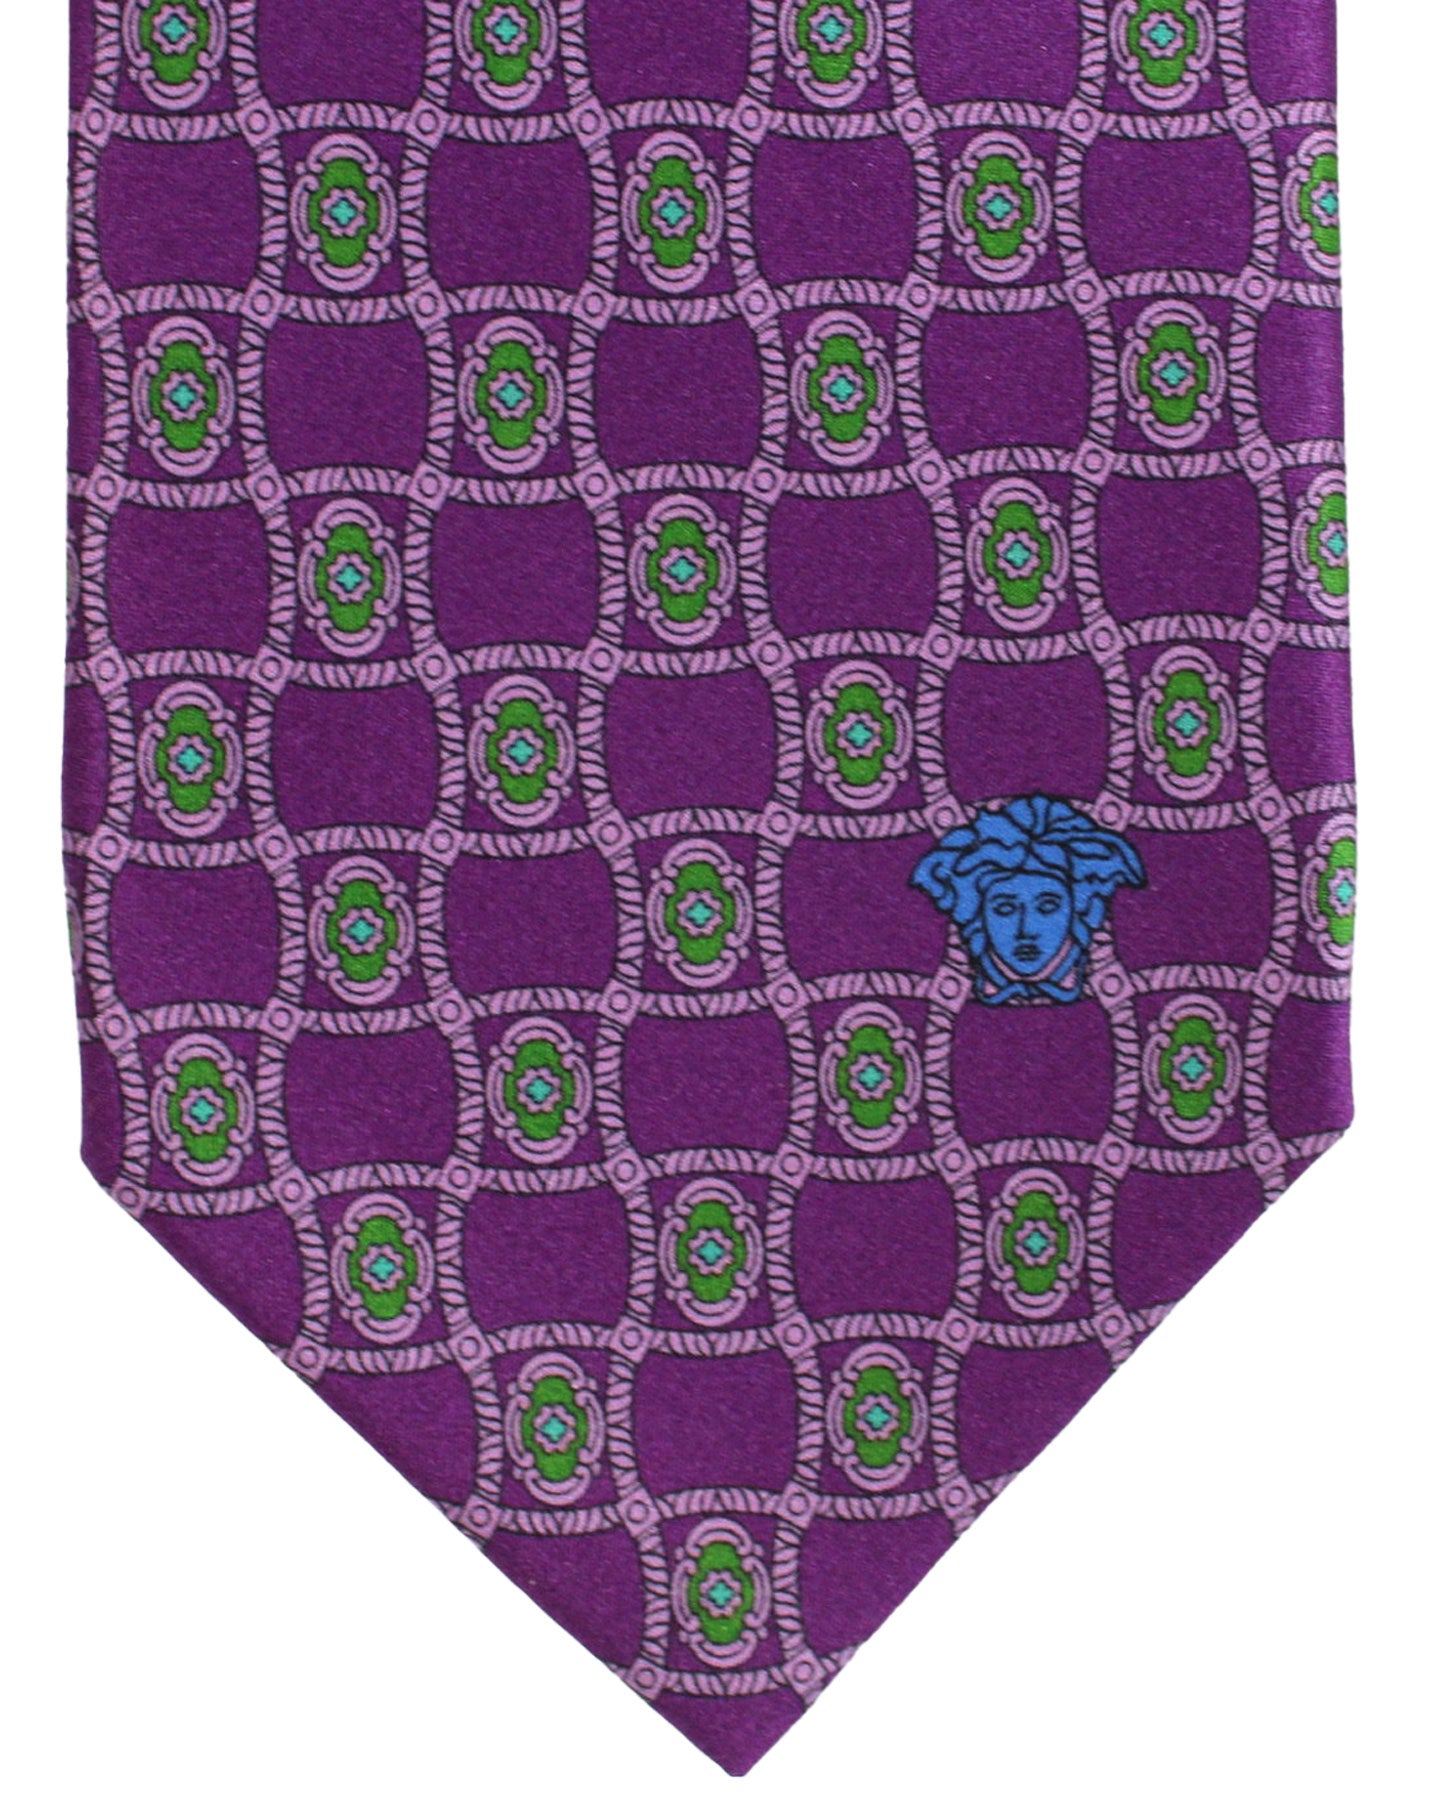 Versace Silk Tie Purple Green Medallions Design